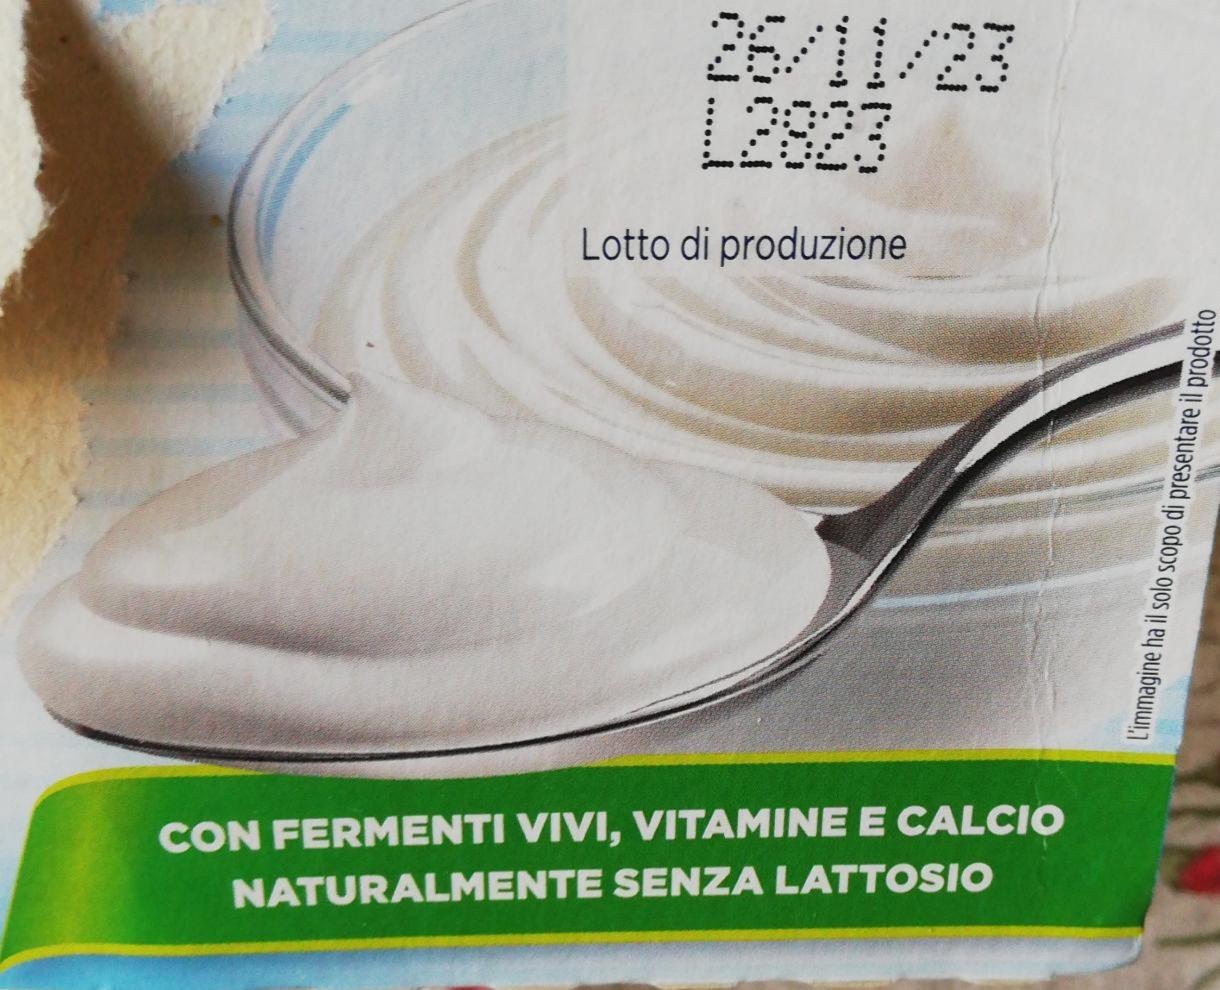 Fotografie - Jogurt vegetale bianco cremoso Valsoia